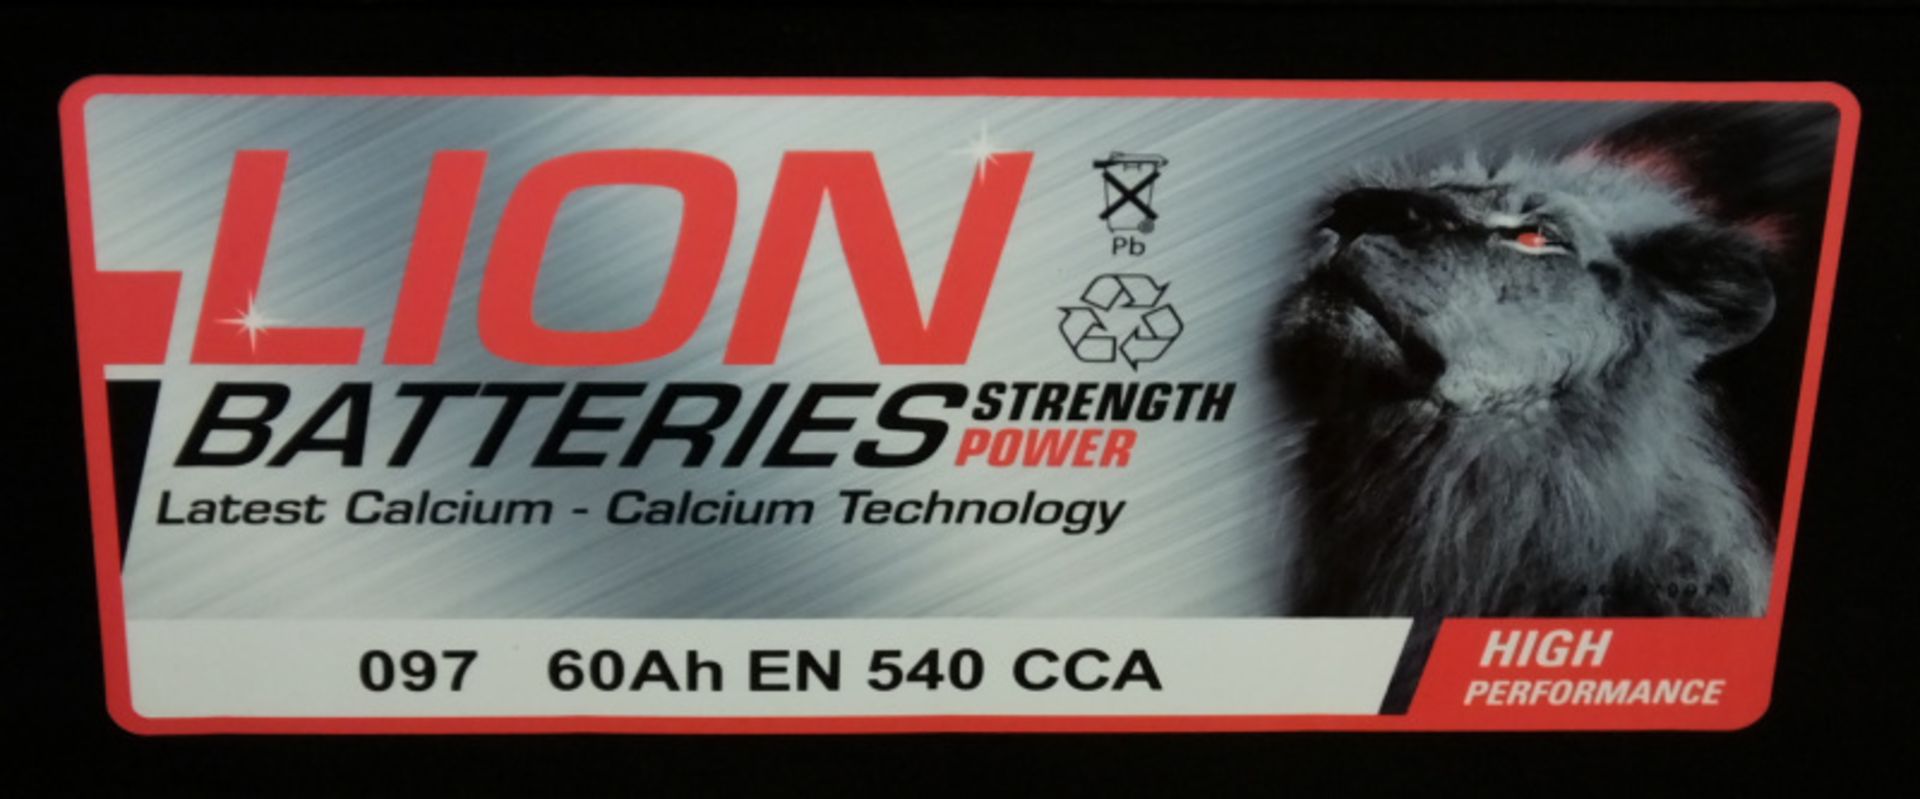 Various Vehicle Batteries - Lion 014 60Ah, 2xLion 097 60Ah, 3x Lion 038 45Ah, Yuasa 1000 - Image 2 of 12